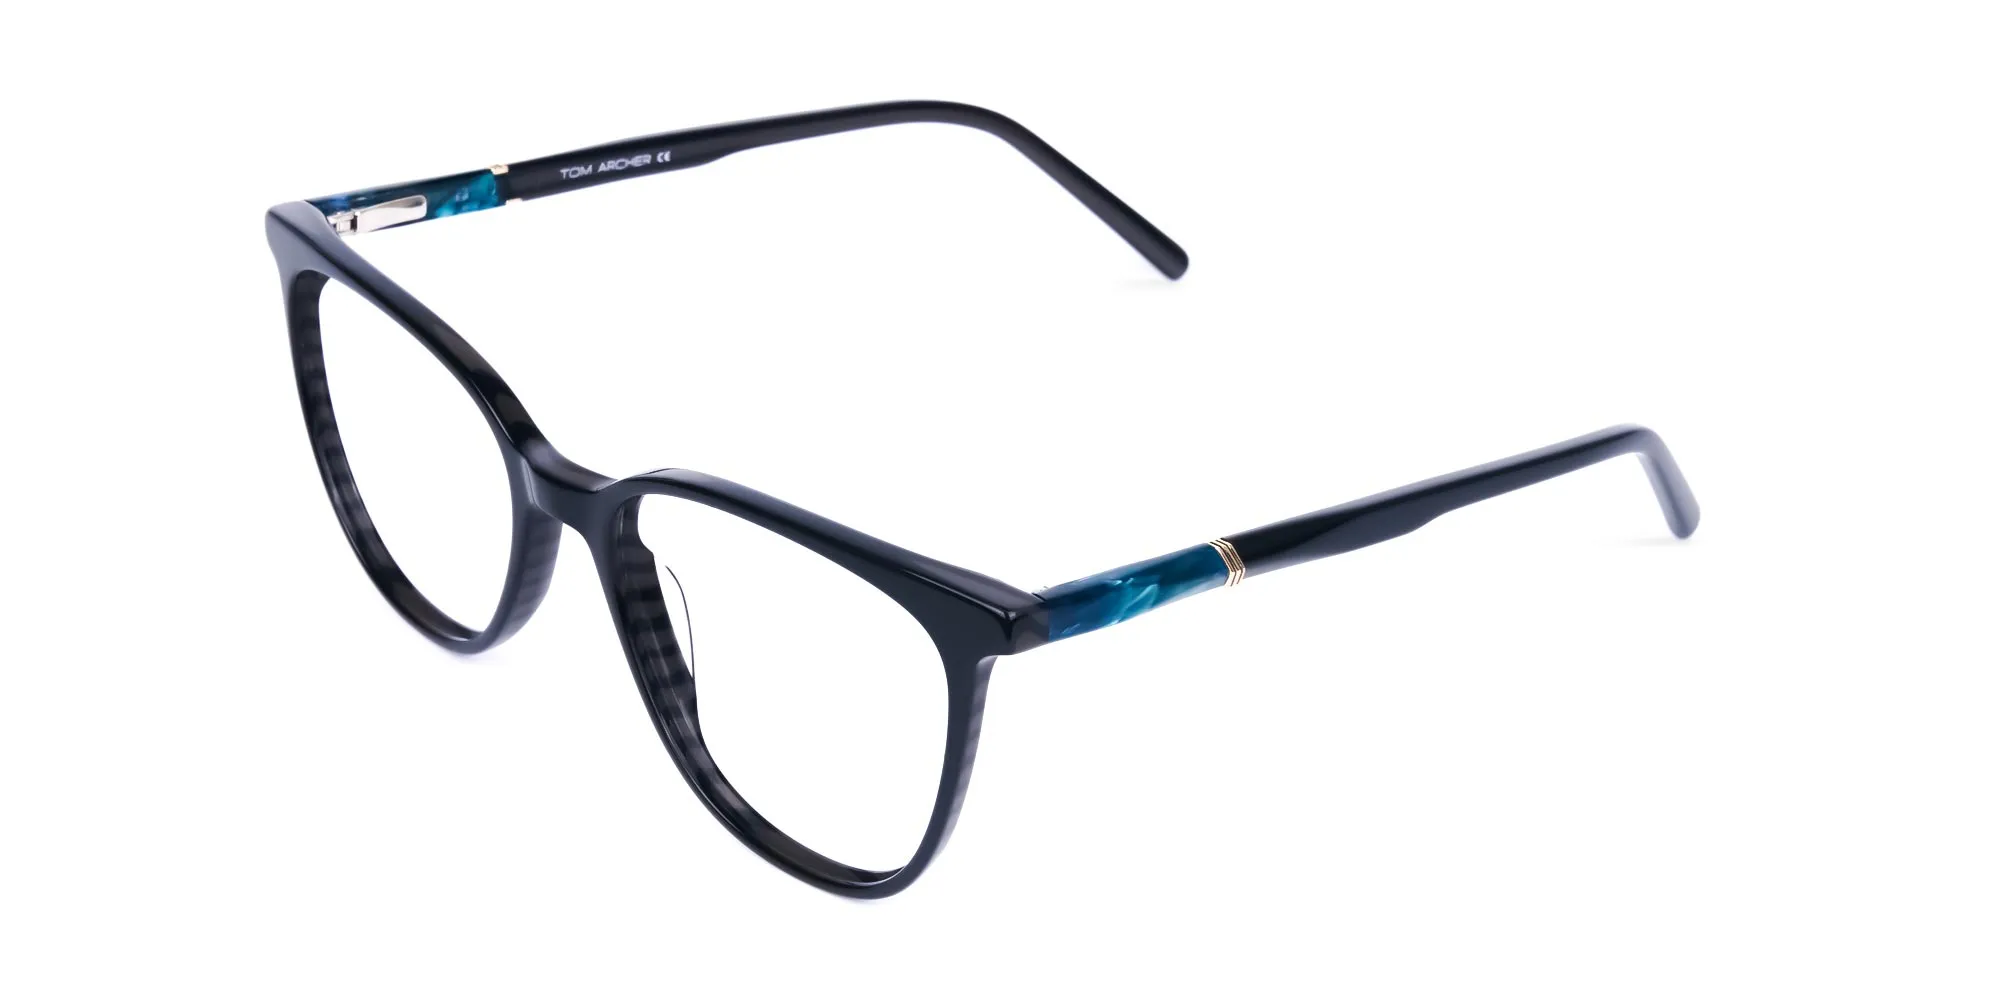 teal cat eye glasses - 2